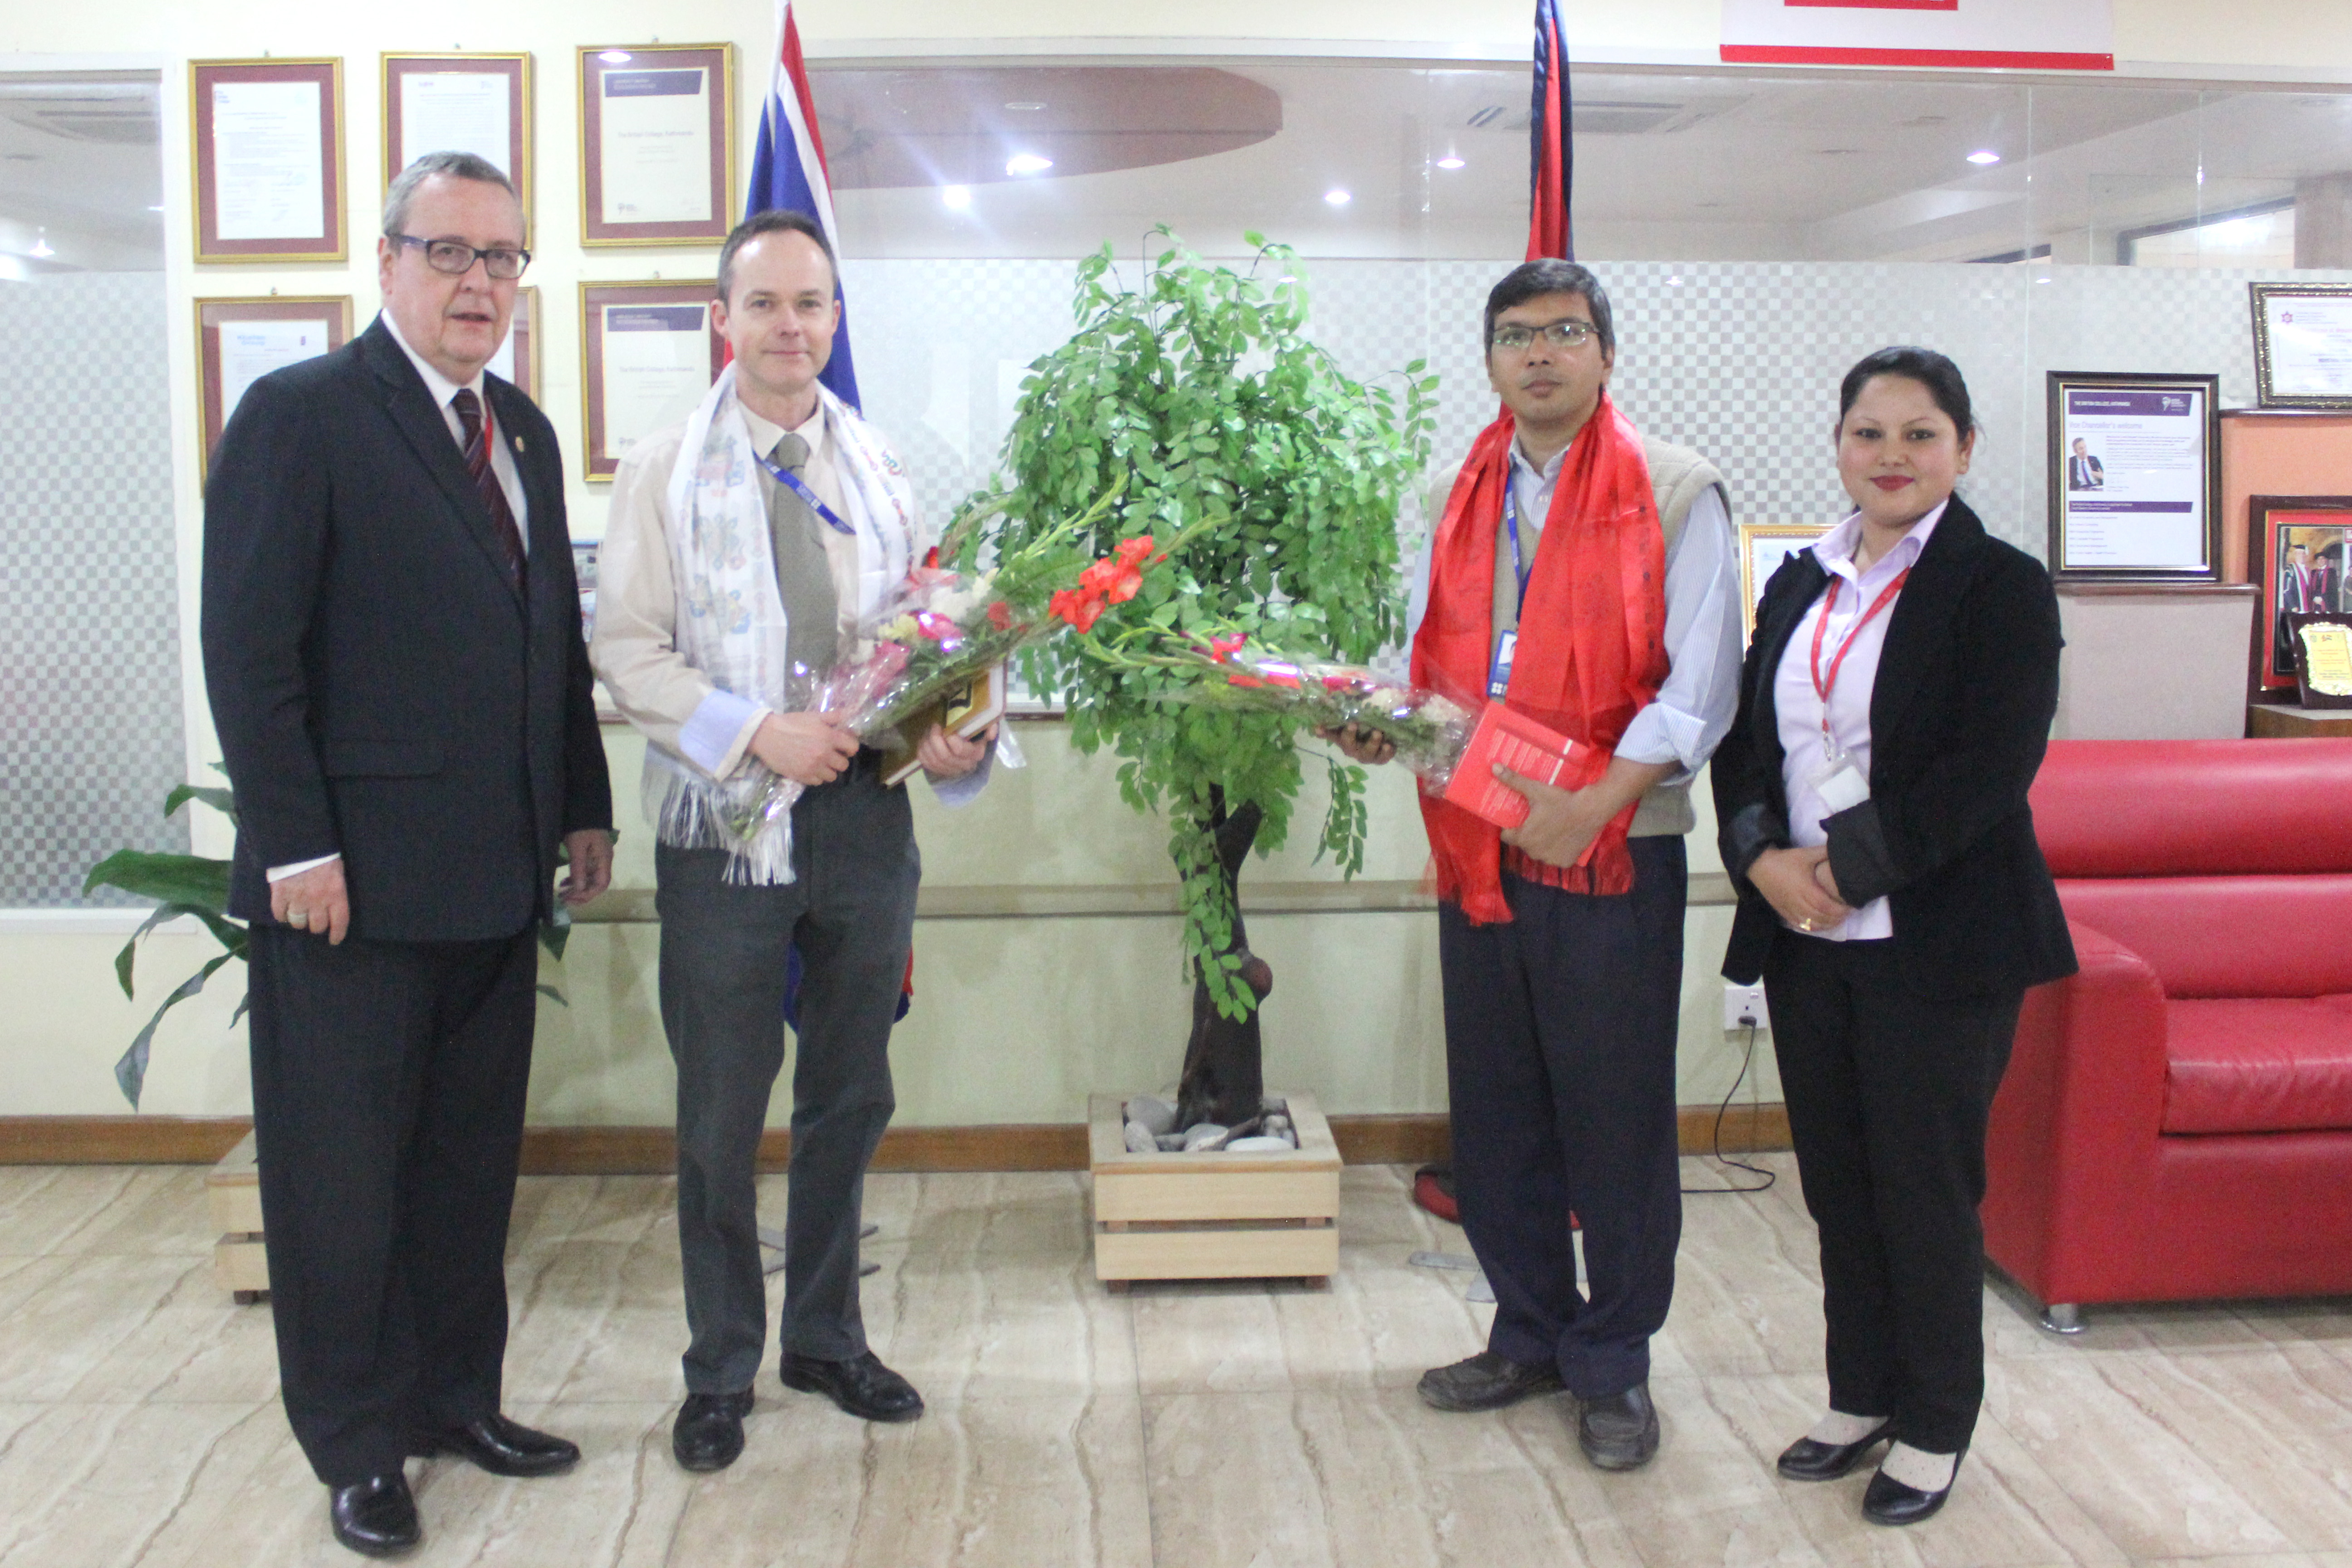 British Council, Nepal visit to British Model College